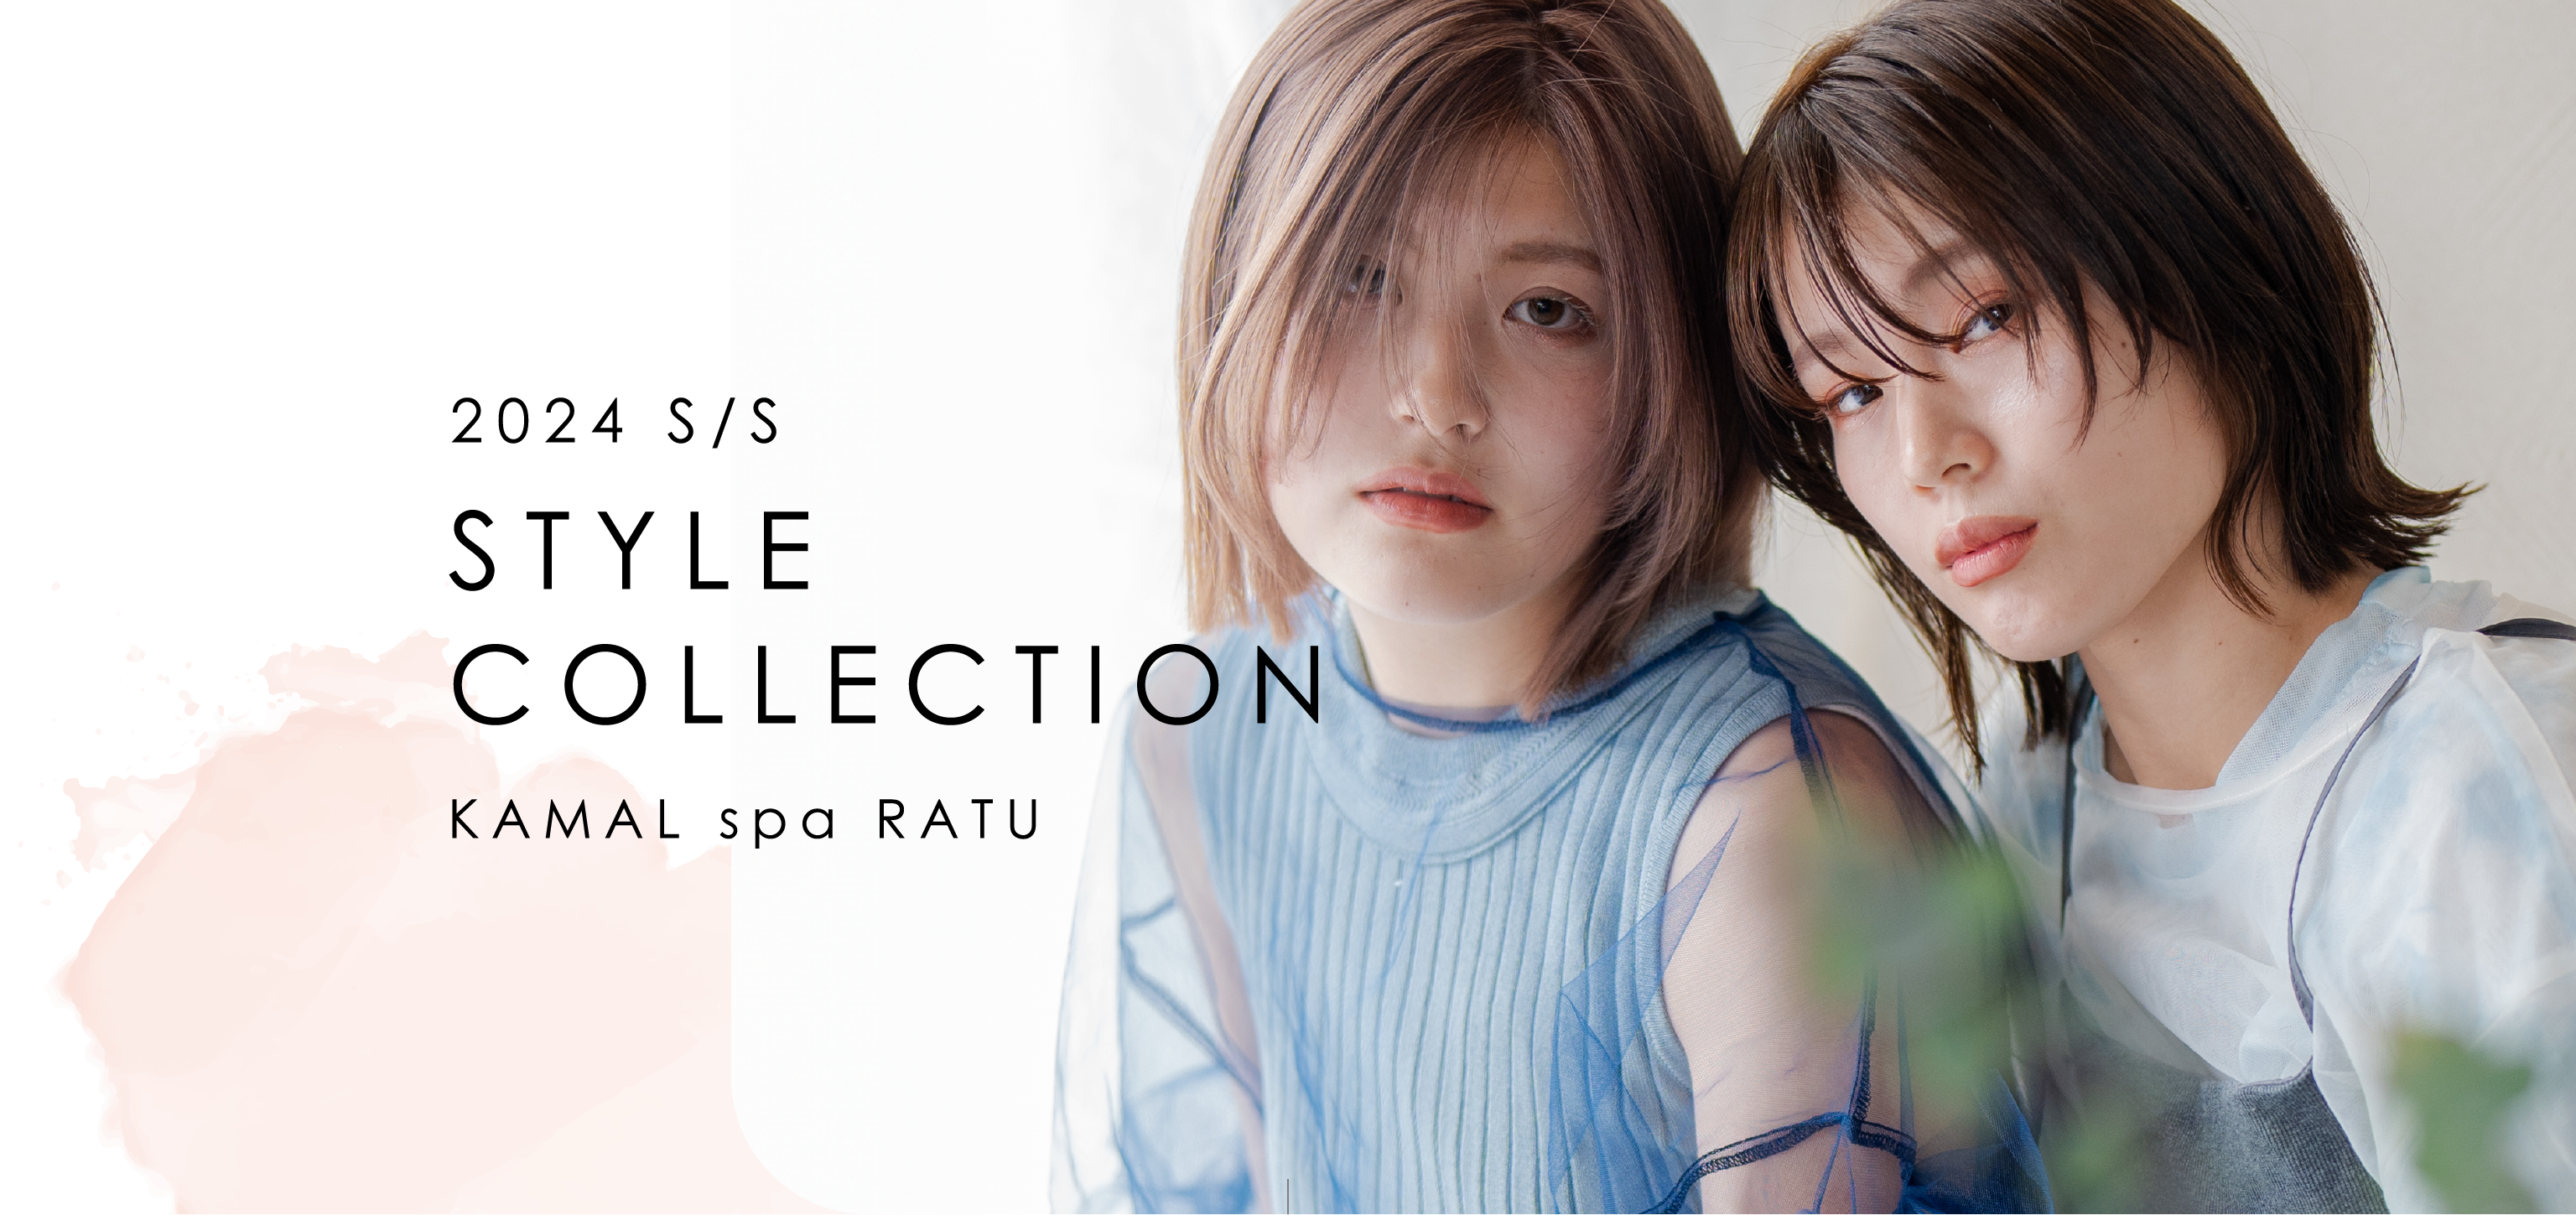 2024 S/S Style Collection KAMAL spa RATU